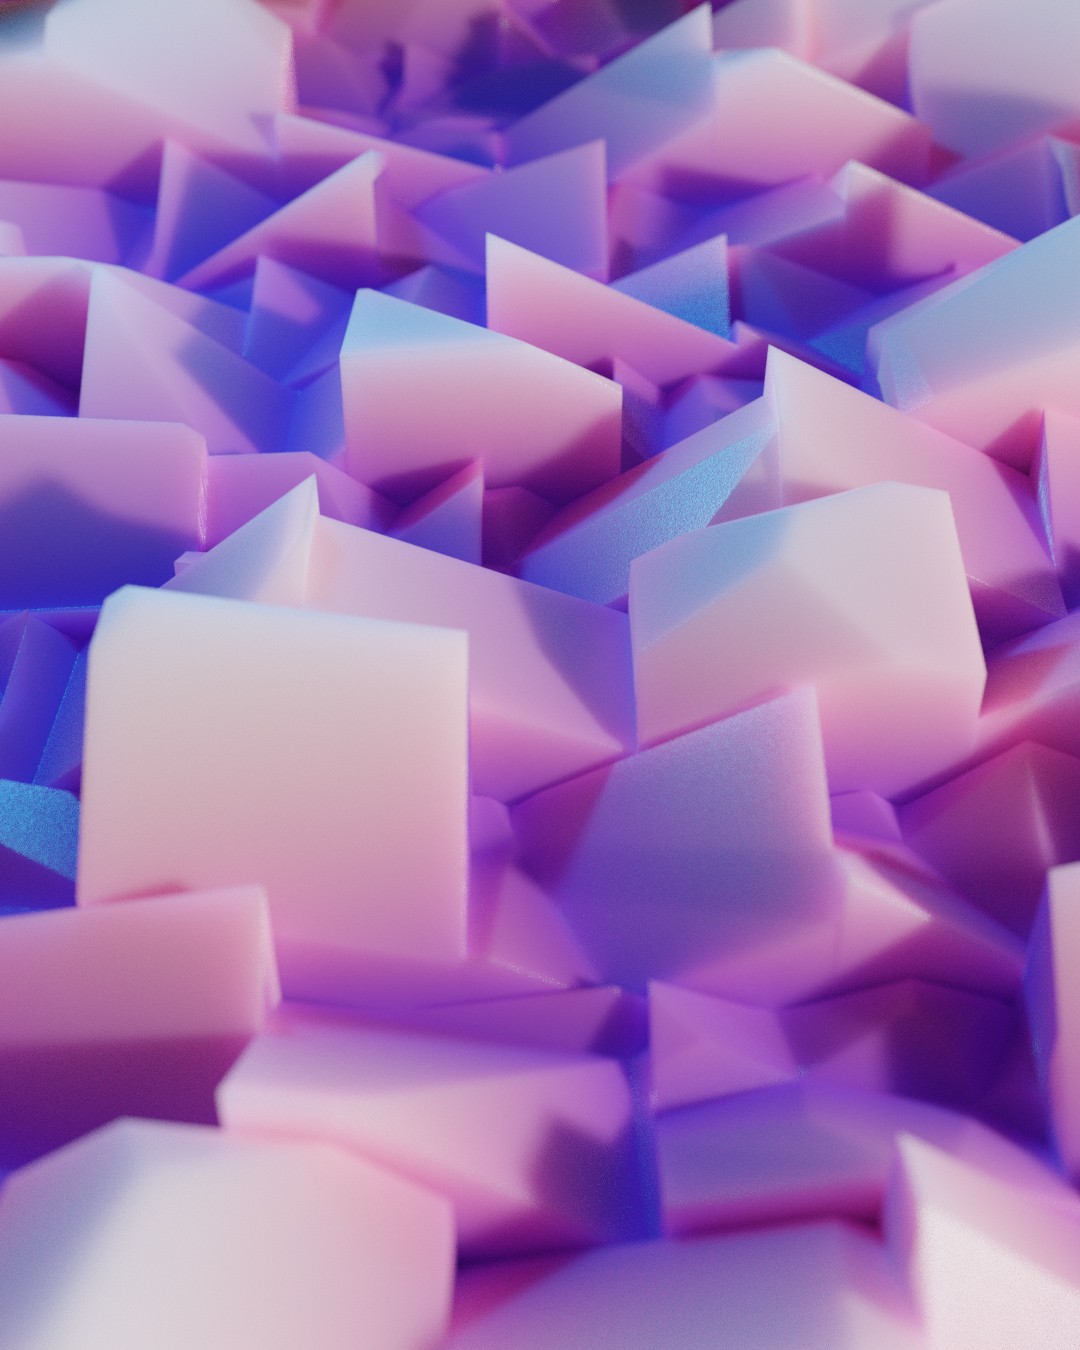 Colorful macro shot of geometric forms